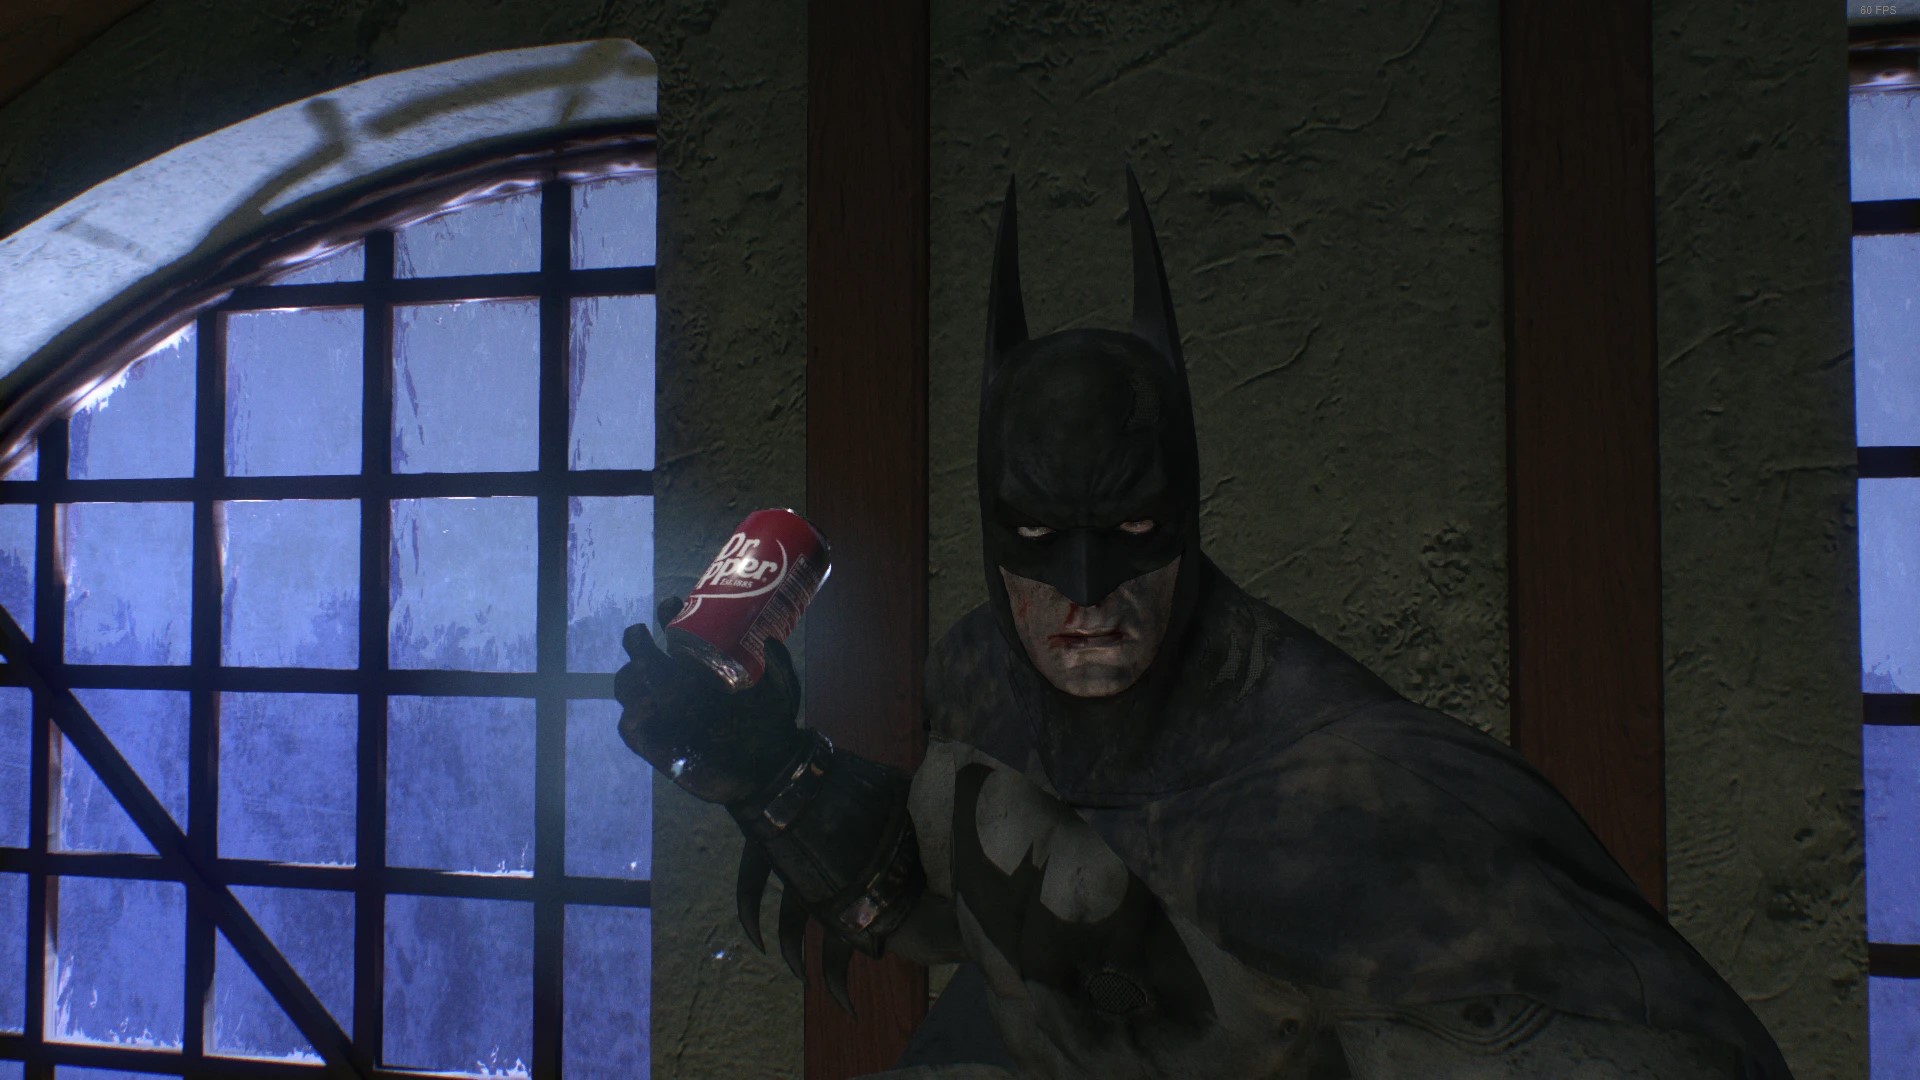 Batman, nose bleeding, wields a can of Dr Pepper in Arkham Knight.